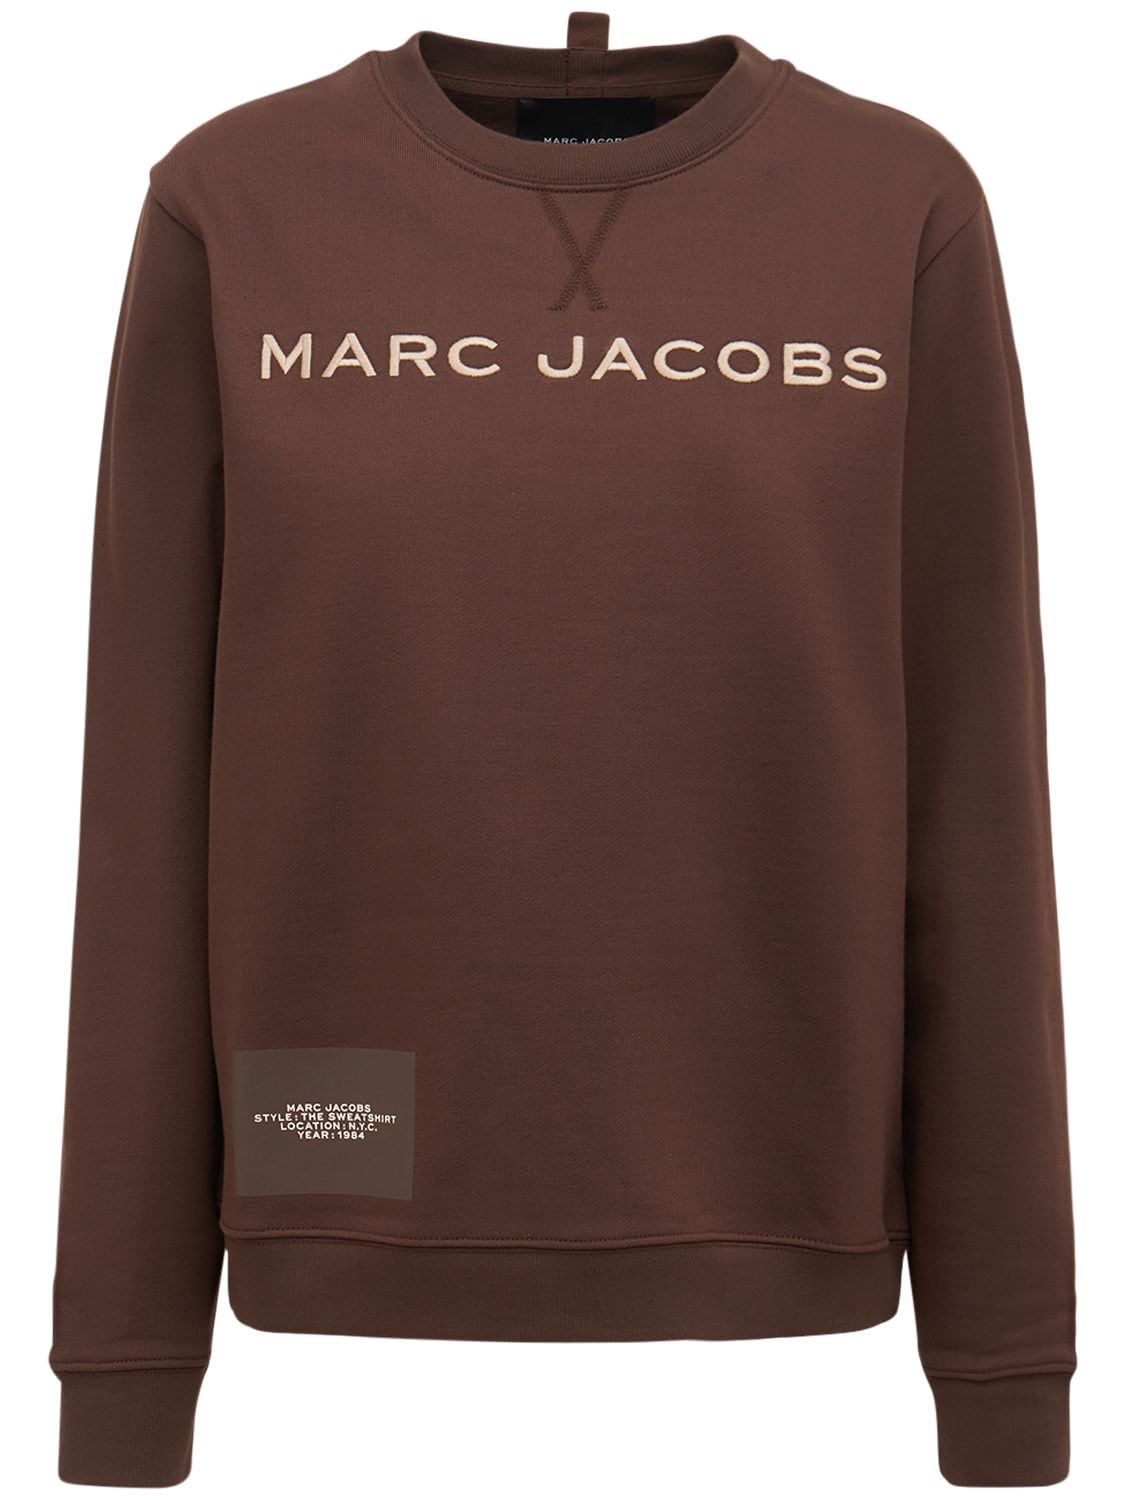 MARC JACOBS (THE) The Cotton Sweatshirt